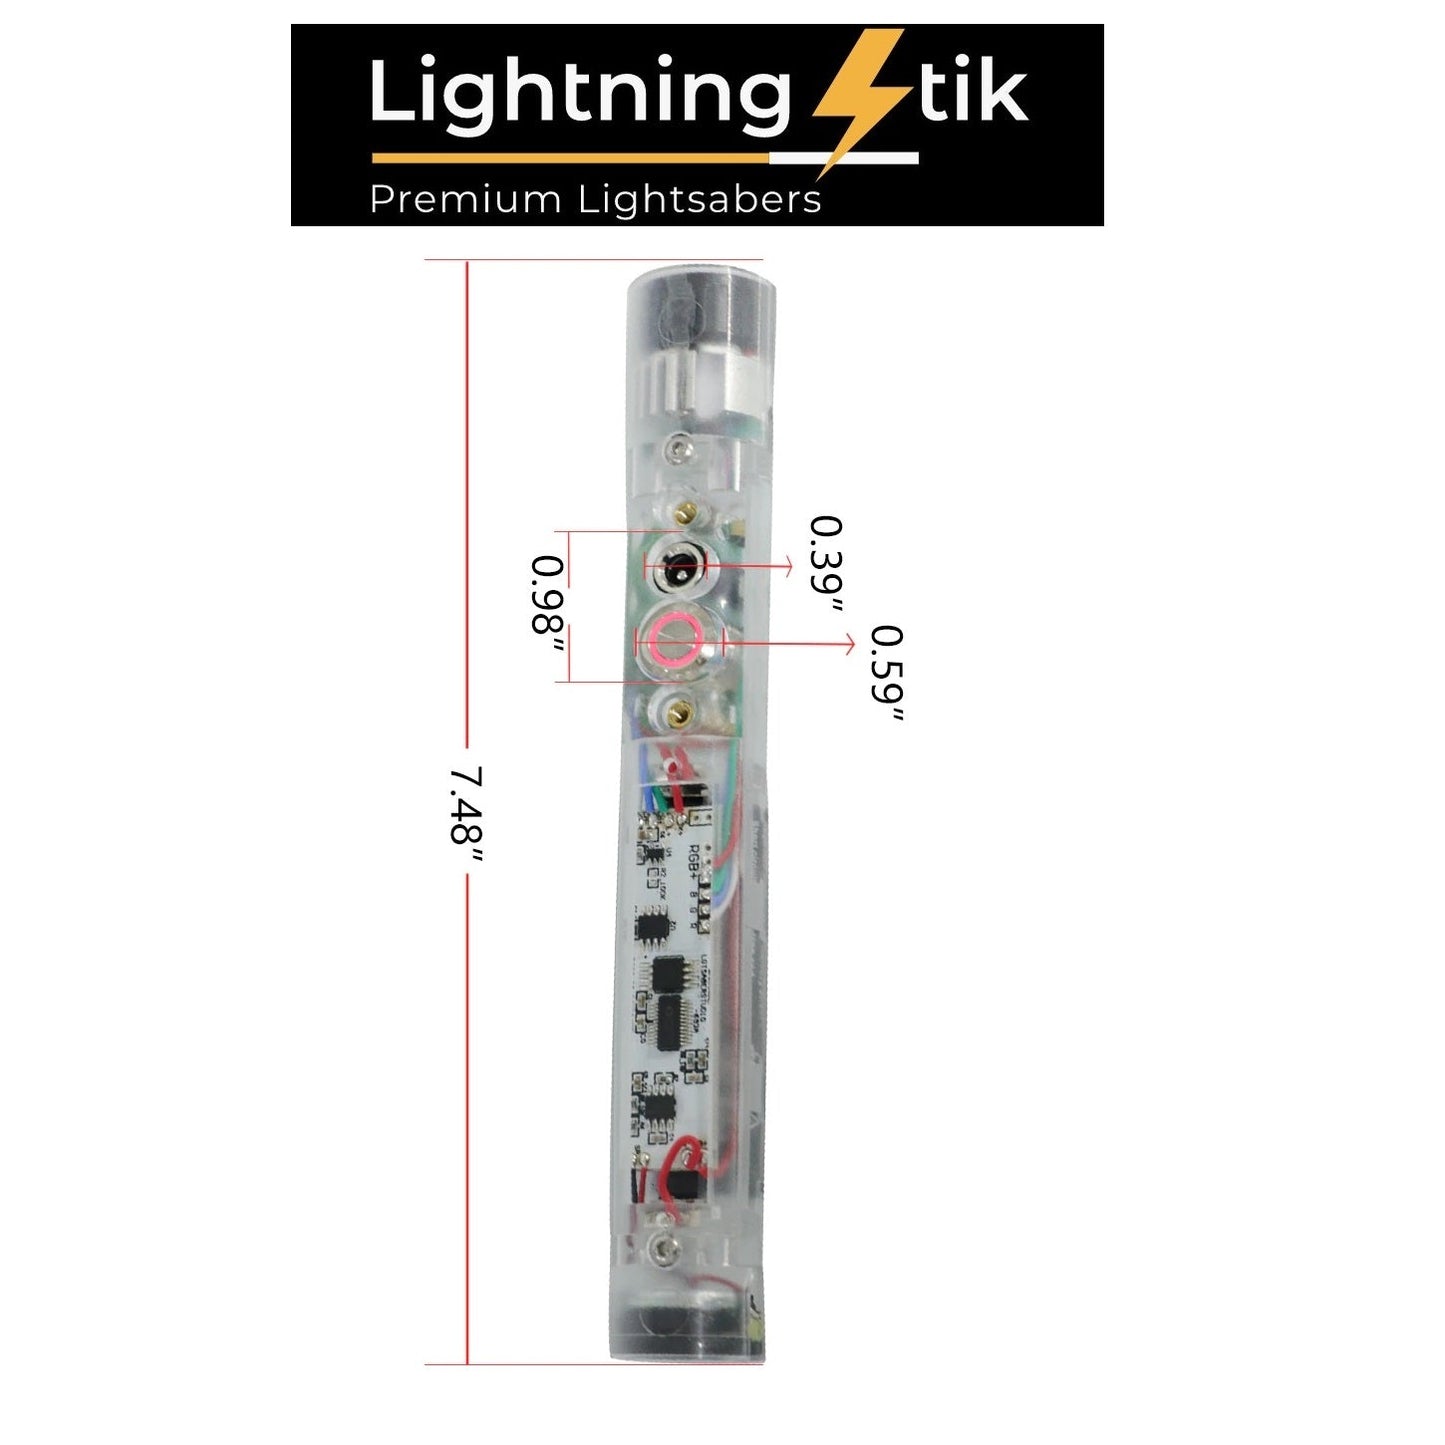 Light saber sound card board electronics kit smooth swing lightning stik